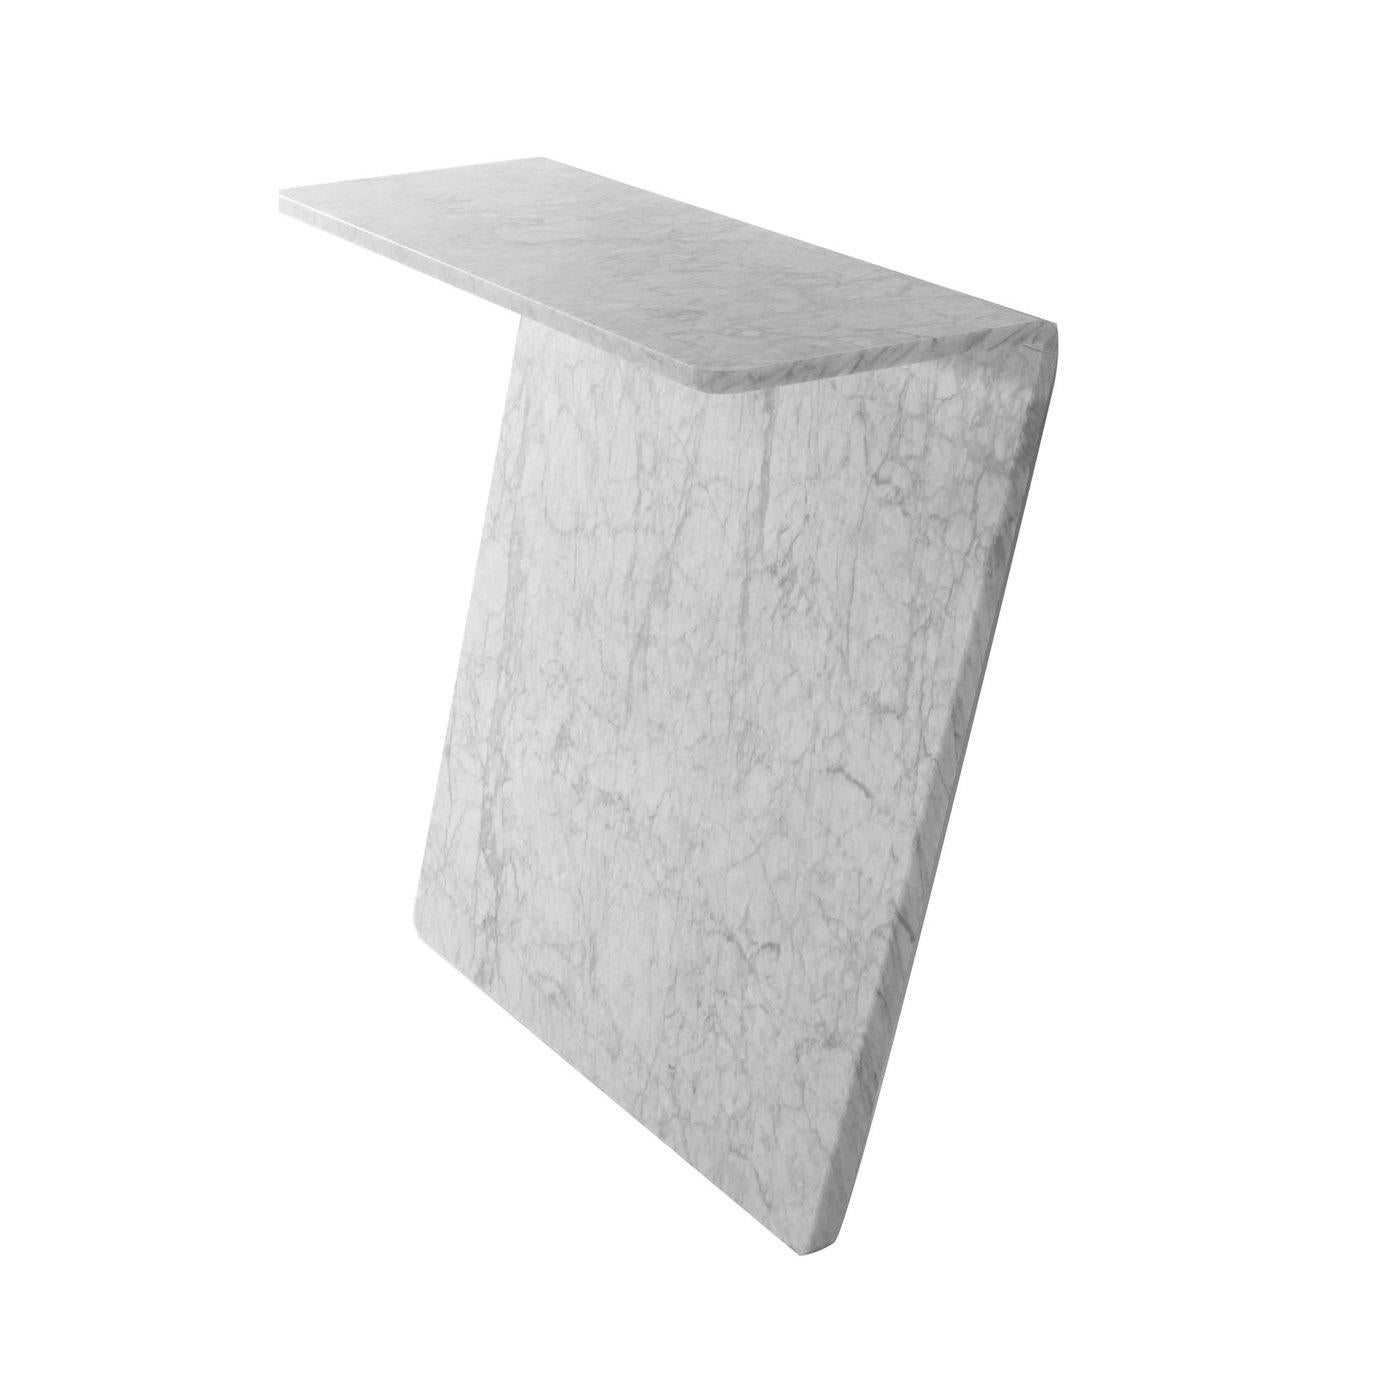 Console in white Carrara marble, matt polished finish.